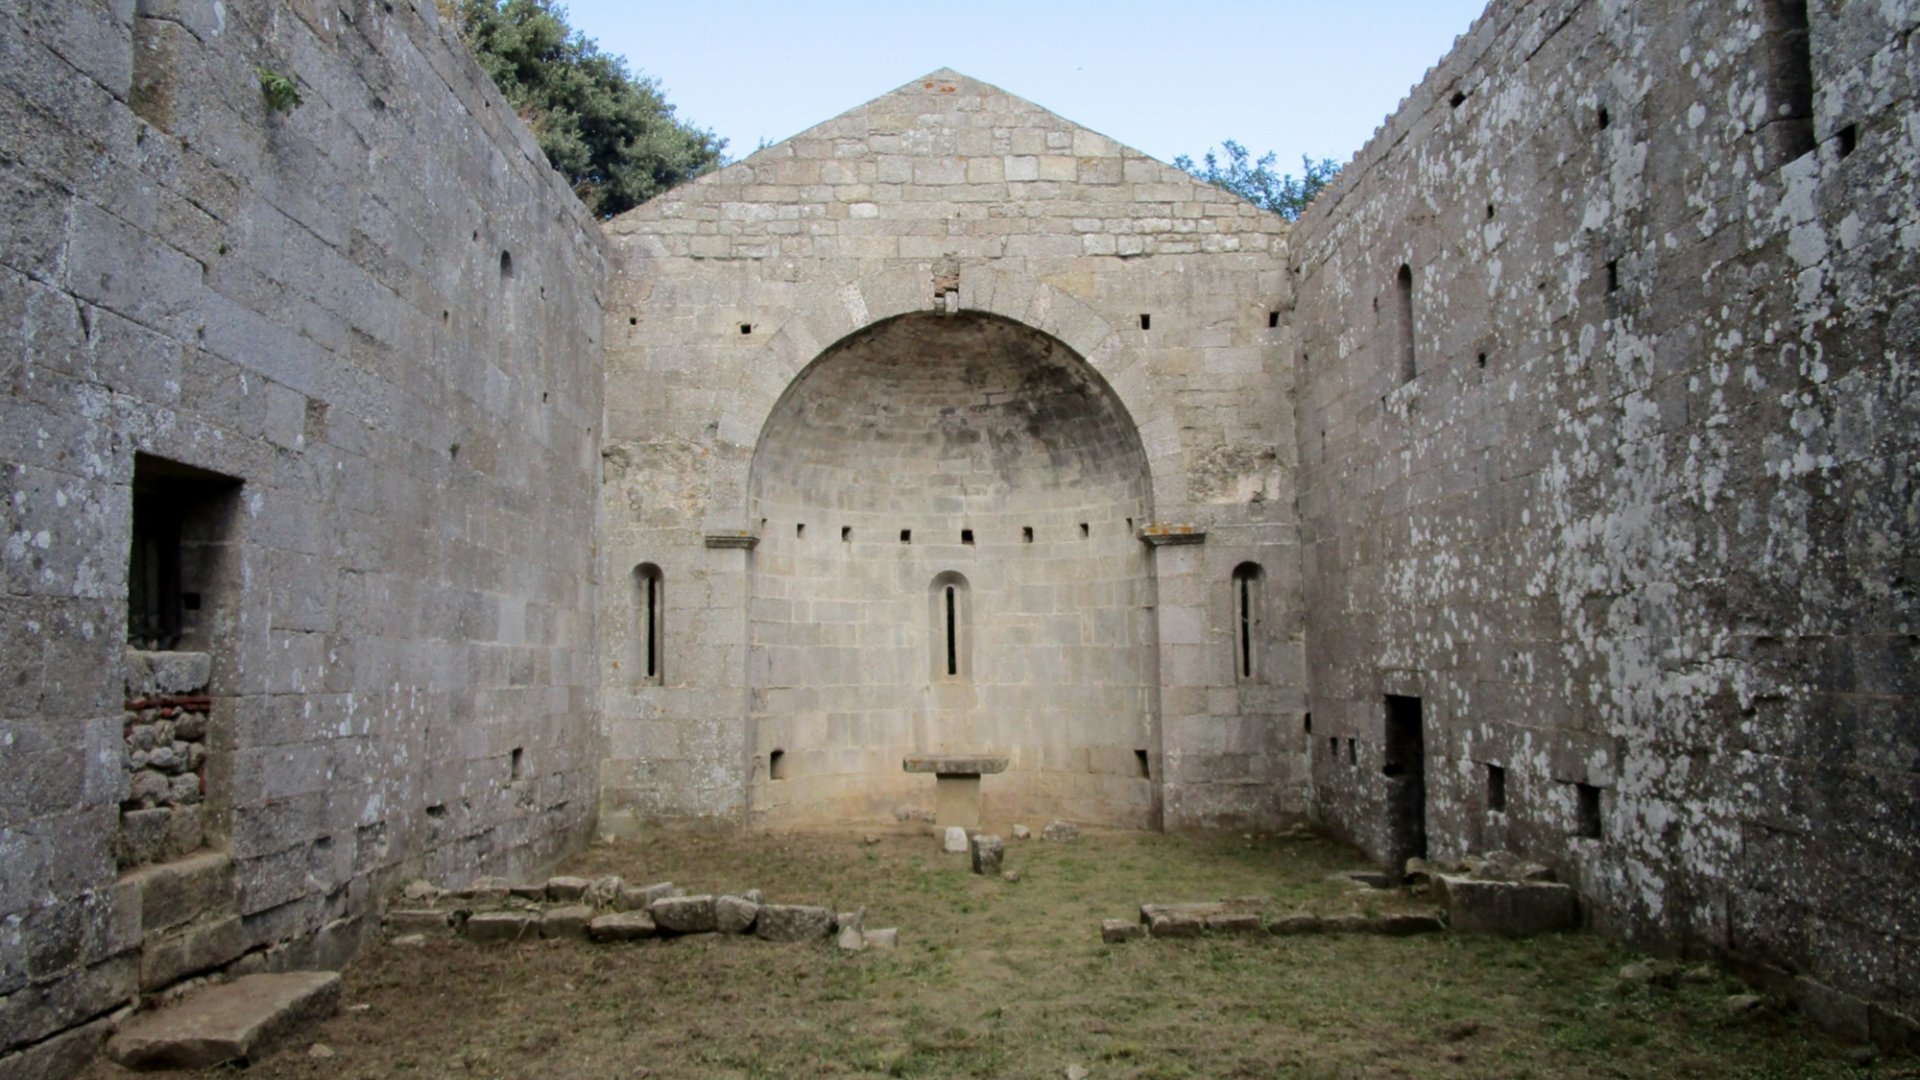 Campo nell'Elba, Interior de la Parroquia San Giovanni